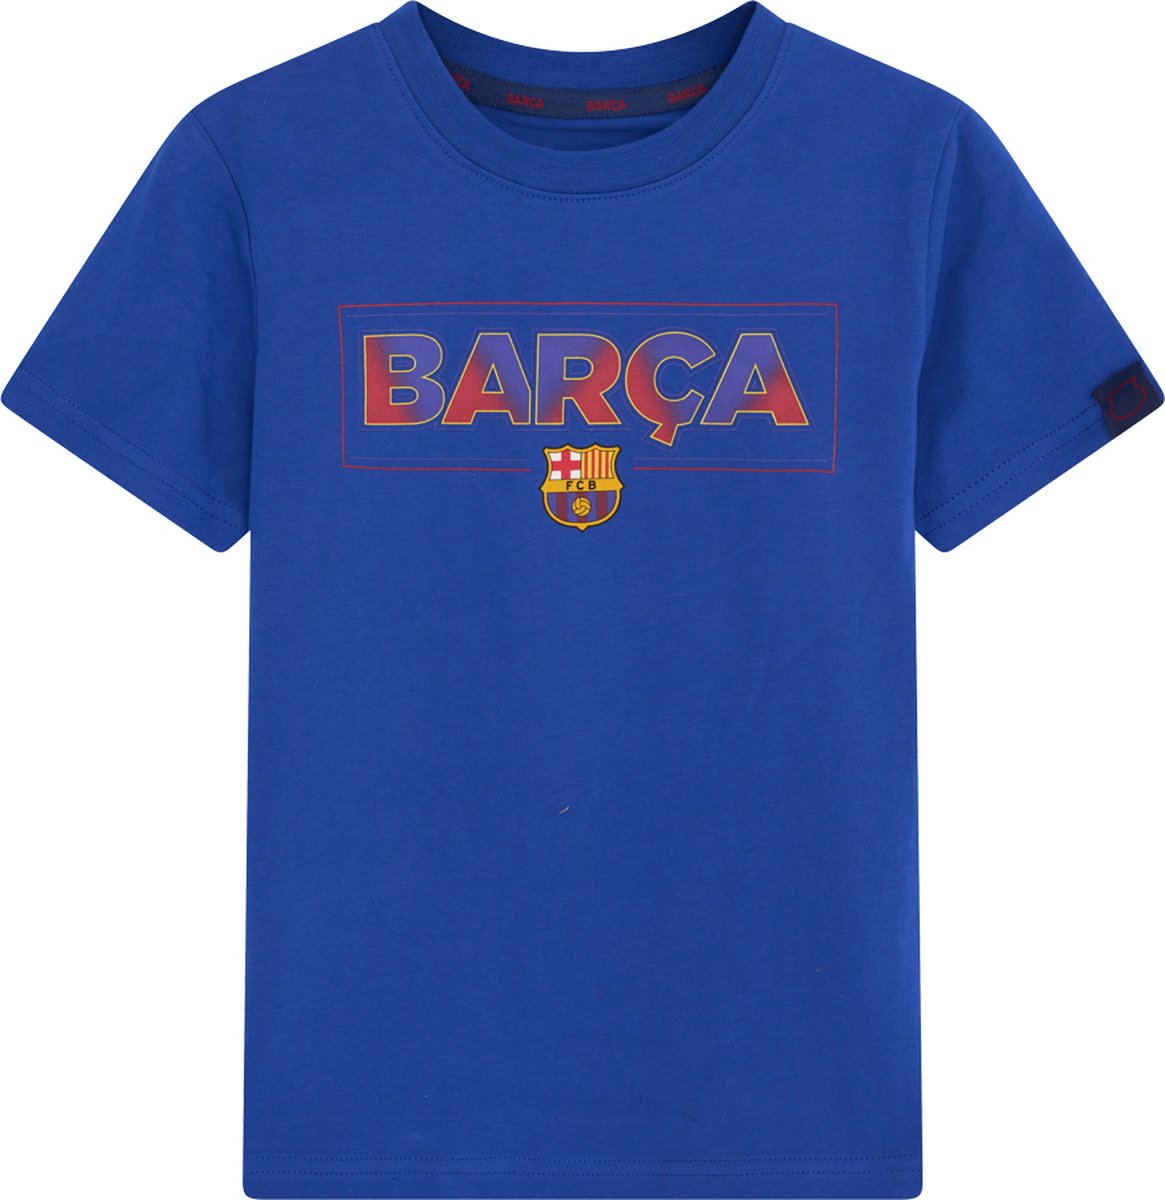 FC Barcelona T-shirt Barça - KIDS - 10 jaar (140) - blauw - officieel FC Barcelona product - 100% katoen